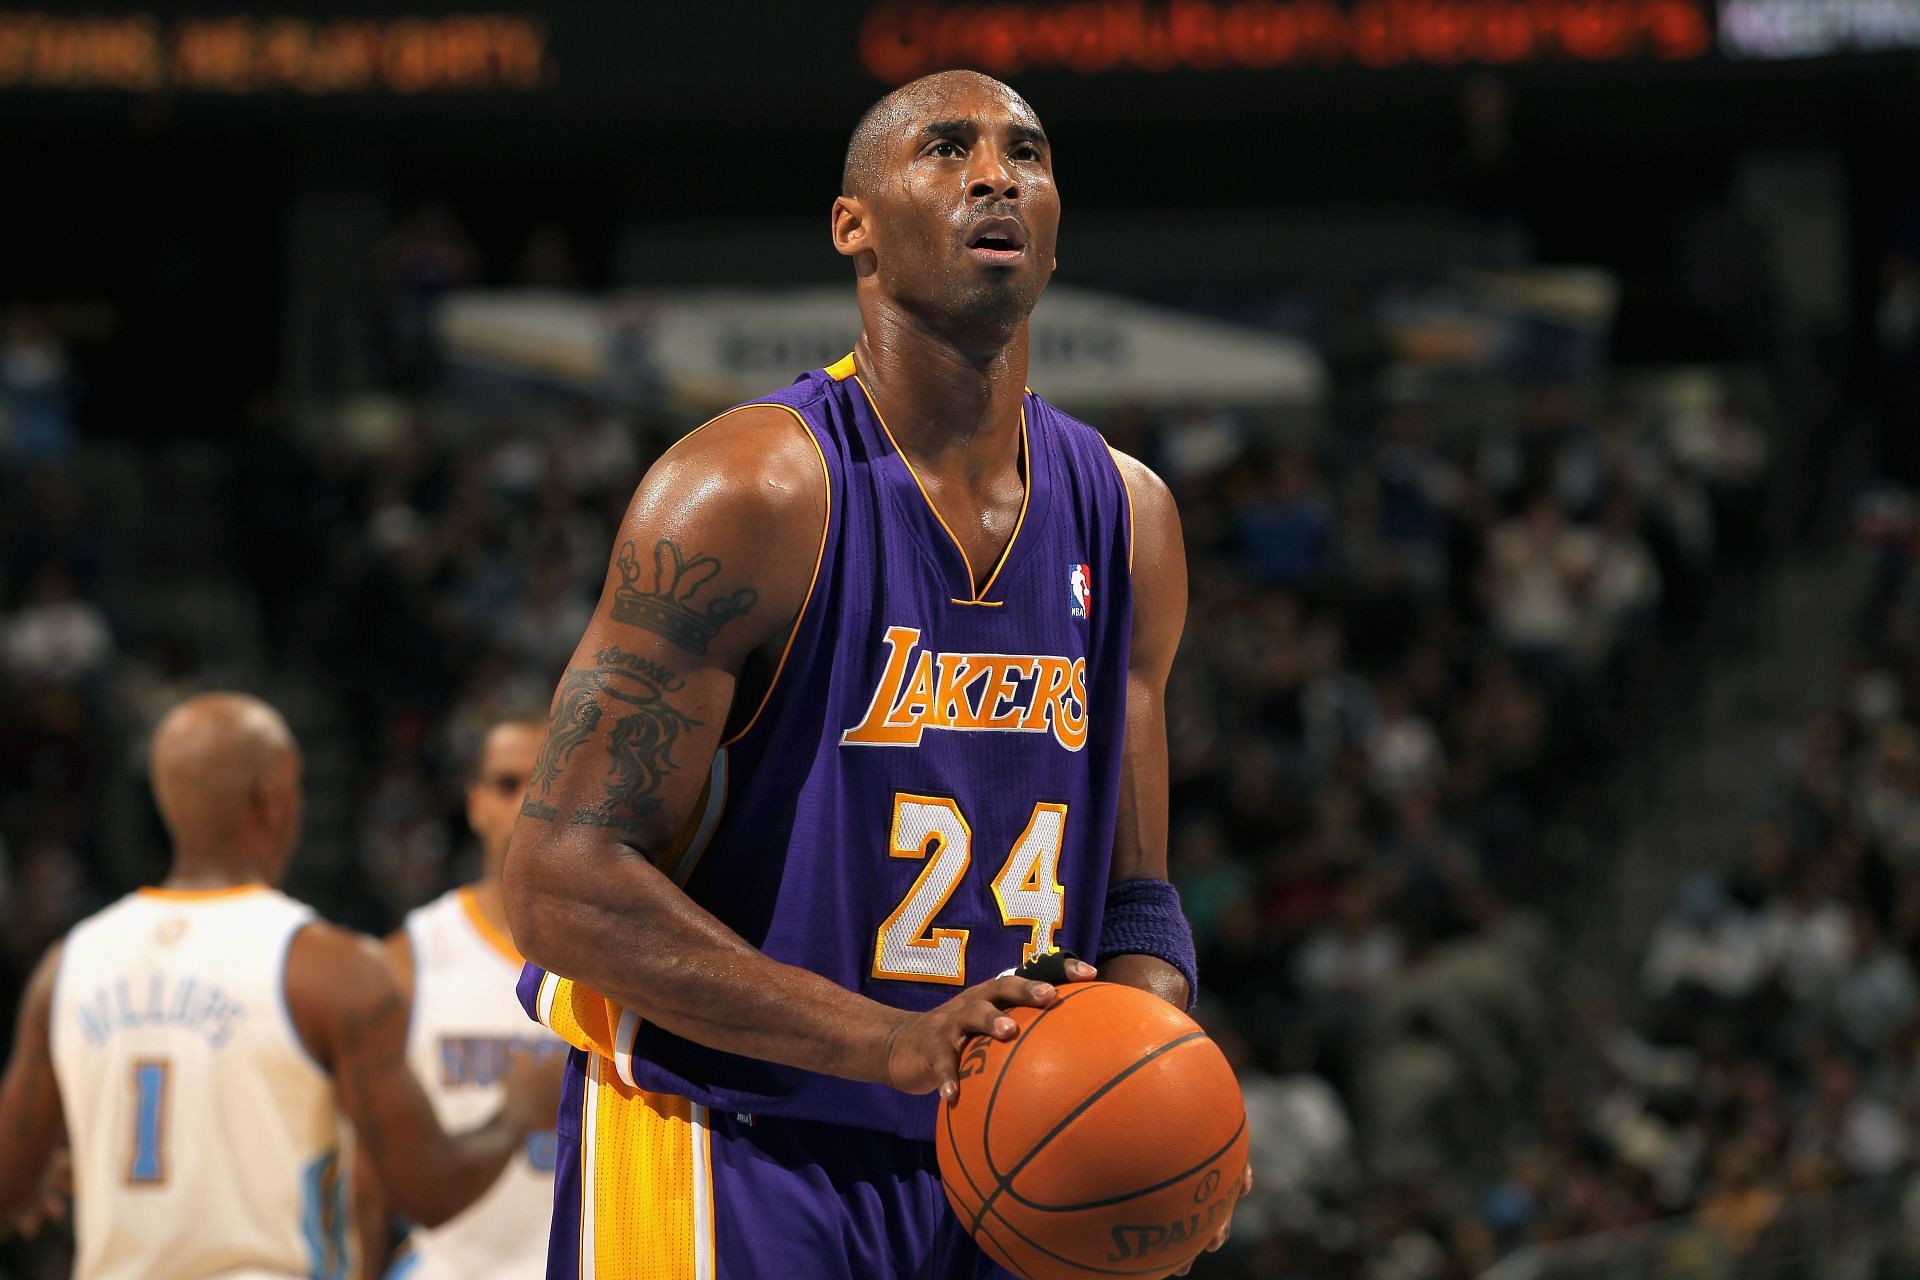 Hall of Famer Kobe Bryant of the LA Lakers